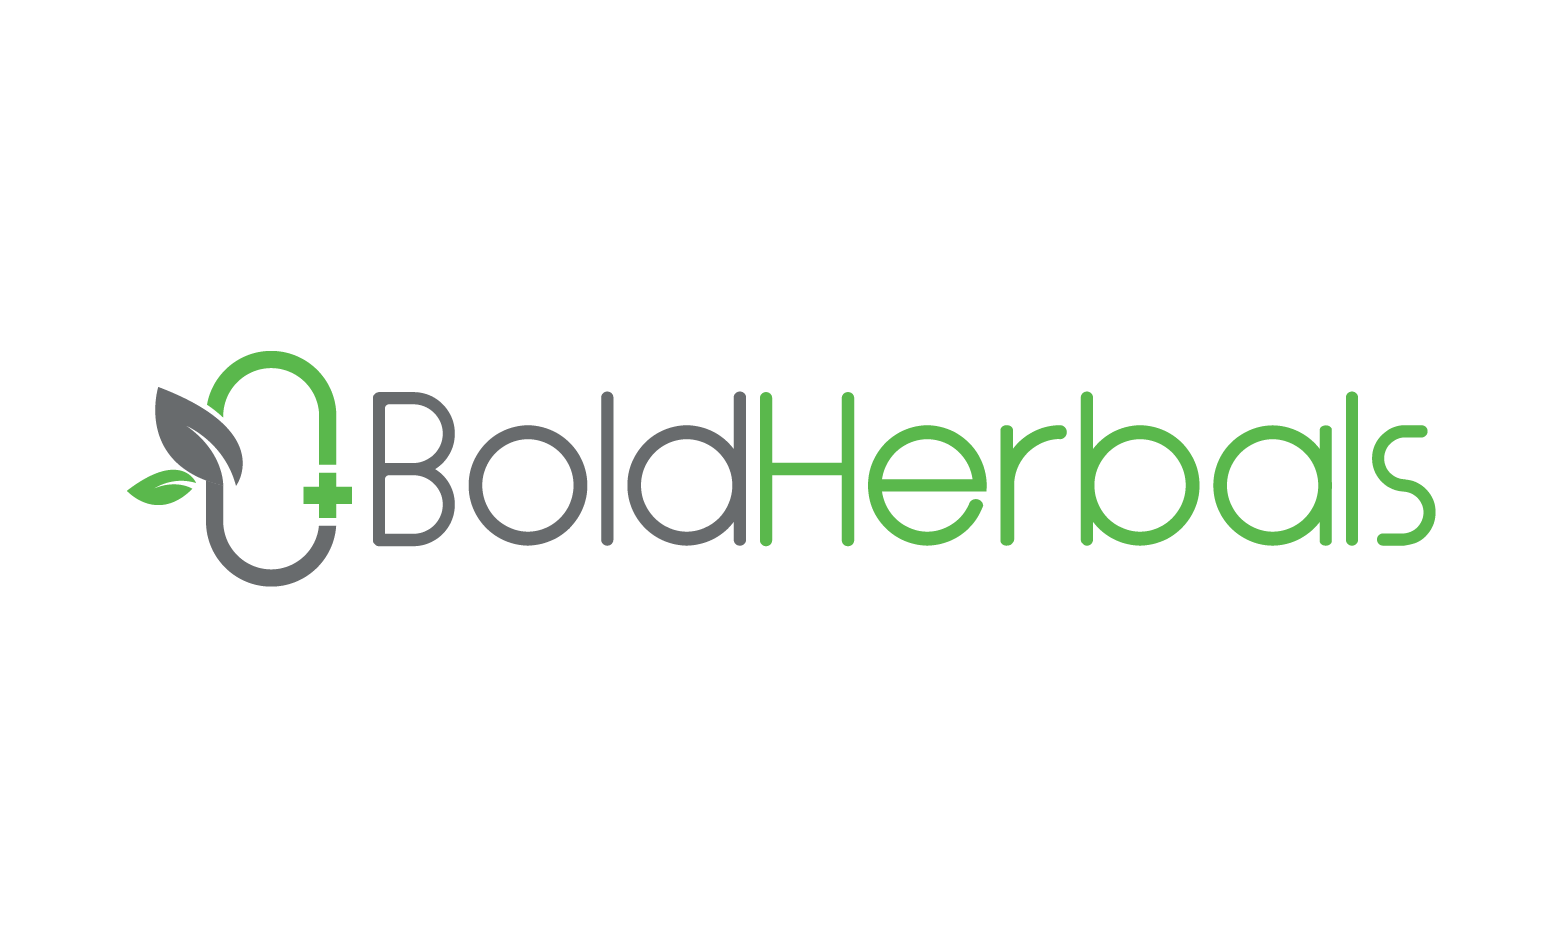 BoldHerbals.com - Creative brandable domain for sale